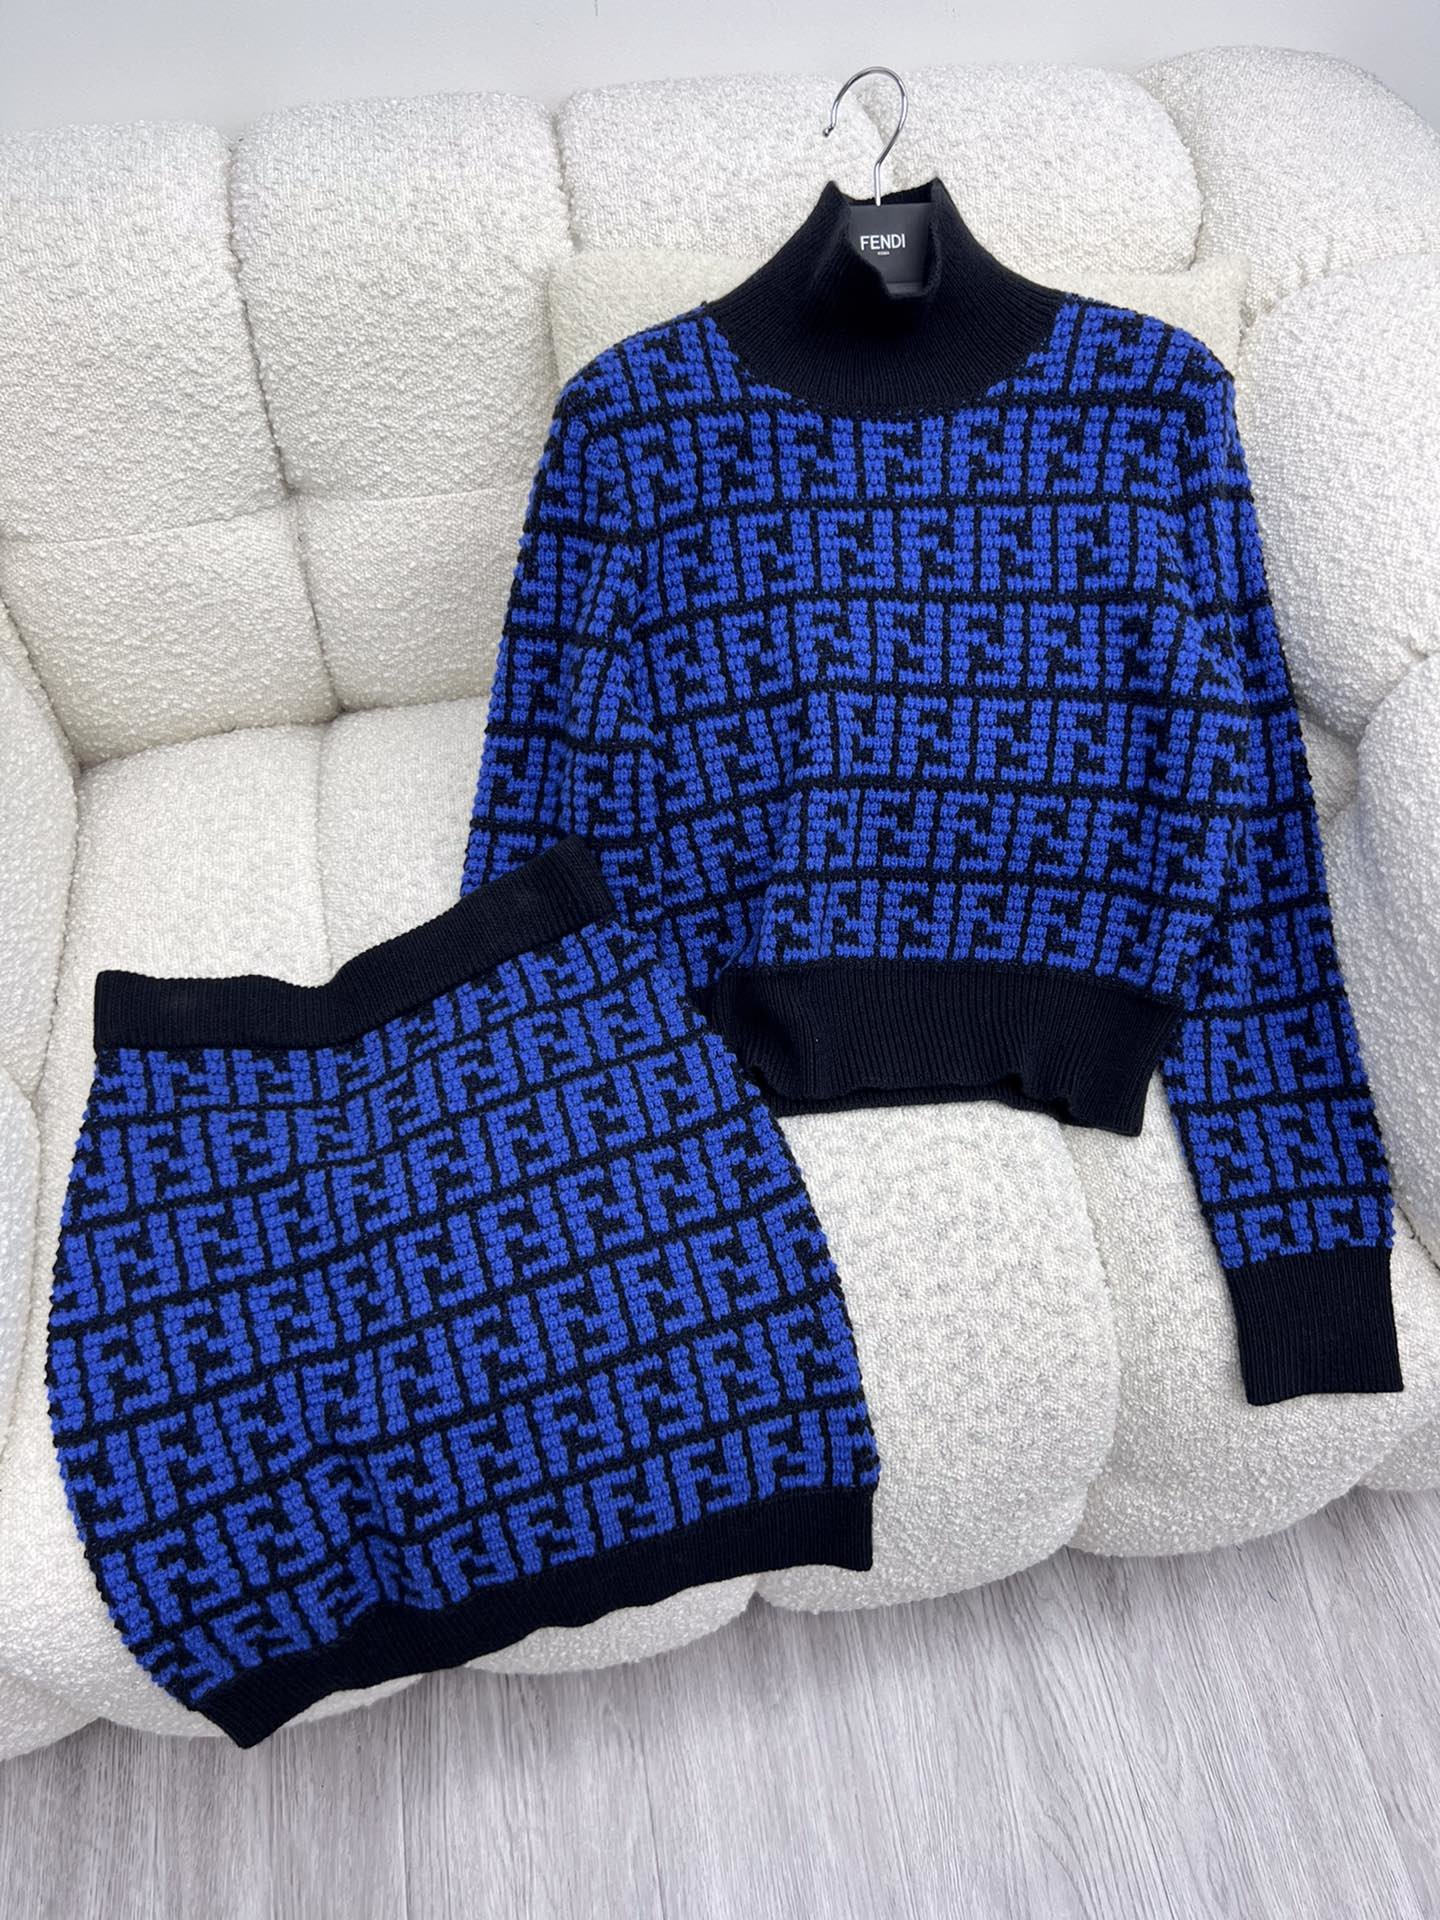 FEND*深蓝色羊绒针织套装来自Stefano Pilati合作设计系列选用ADD%羊绒面料制作高腰包臀版型剪裁 全副深蓝色FF钩针设计搭配同系列毛衣 打造完美造型smlzsdqwesdjbybdlyzbdbs